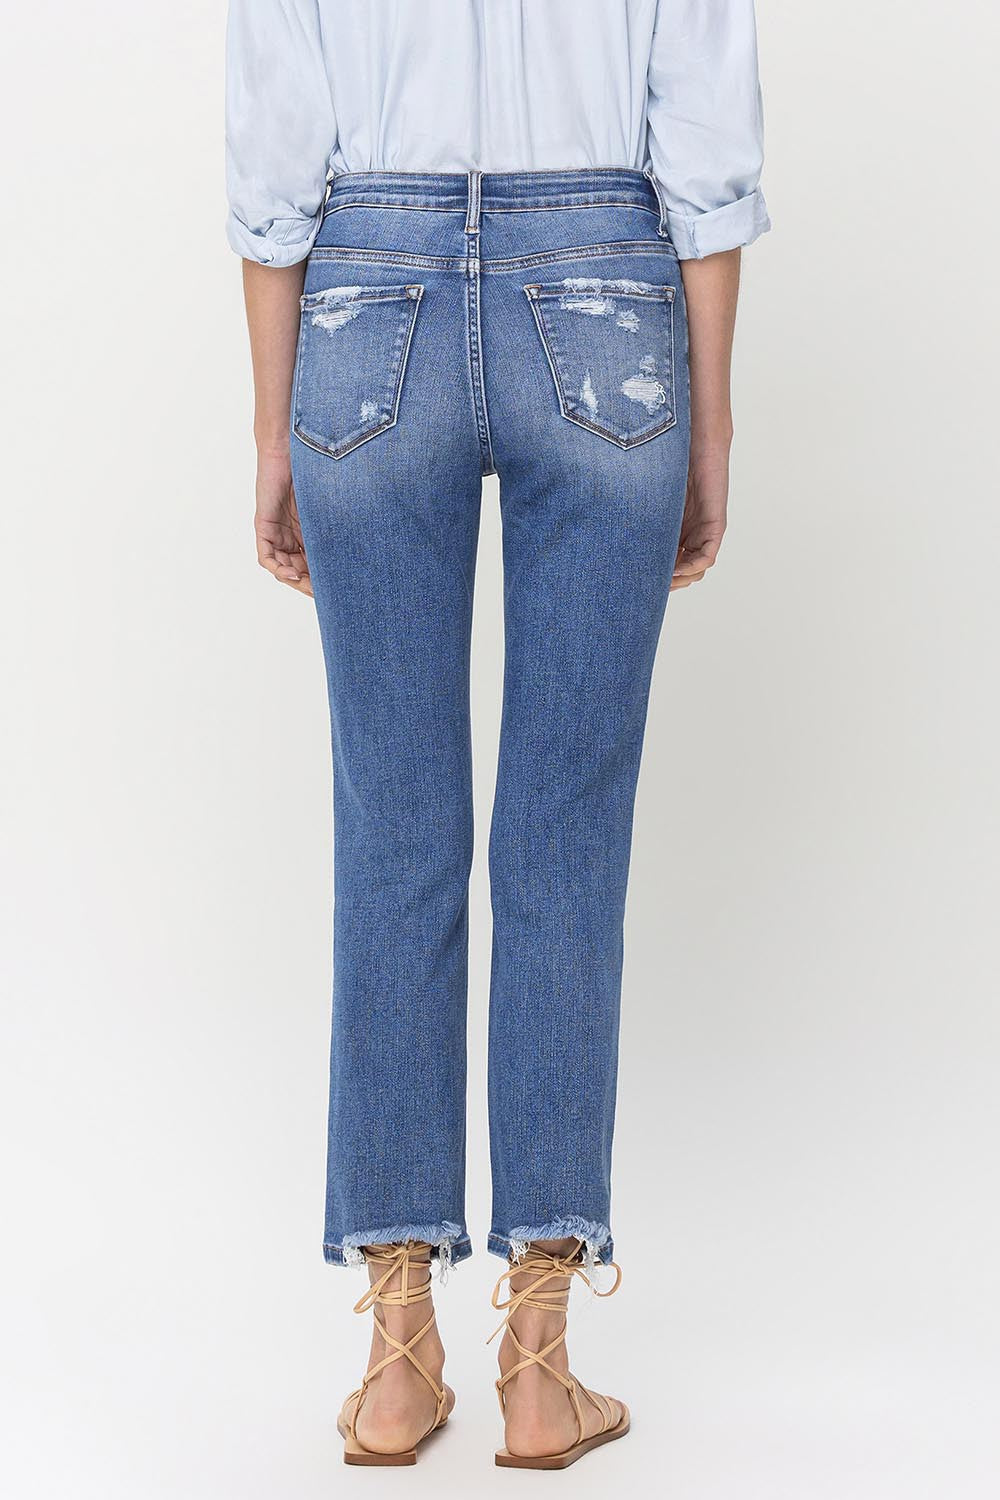 Lovervet Megan Straight Jeans